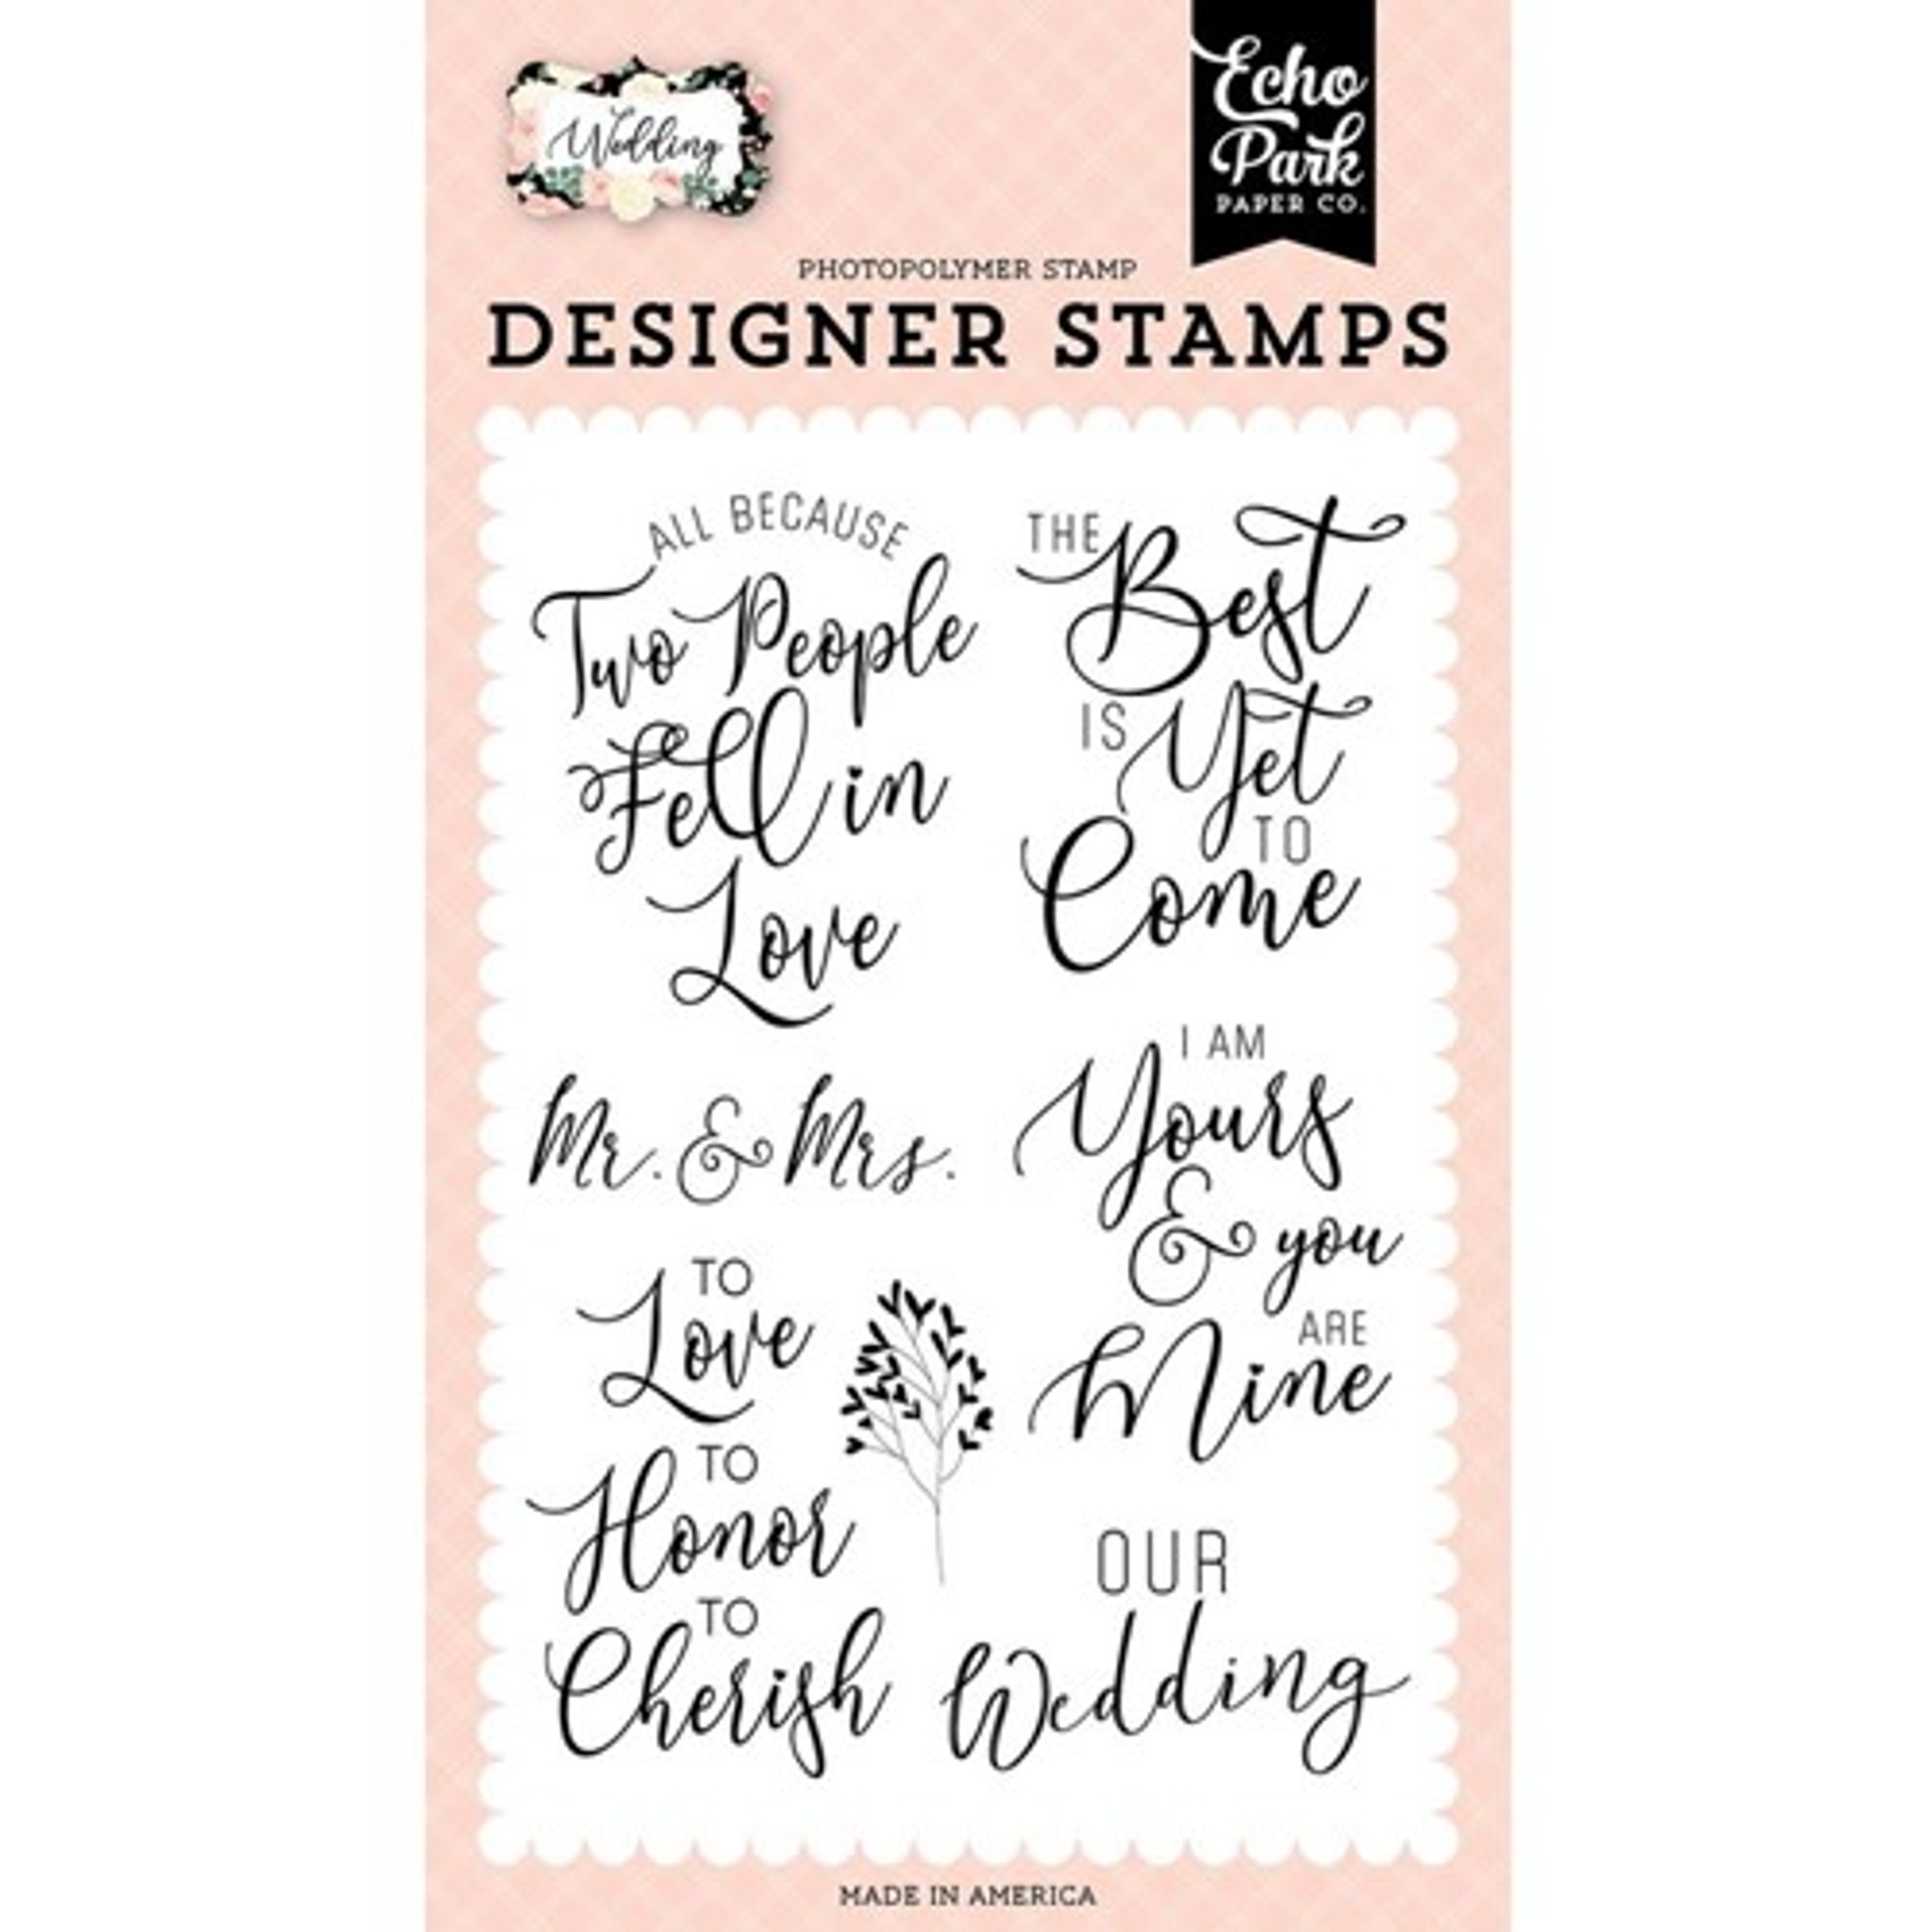 Wedding Bliss: Mr & Mrs 4x6 Stamp - Echo Park Paper Co.